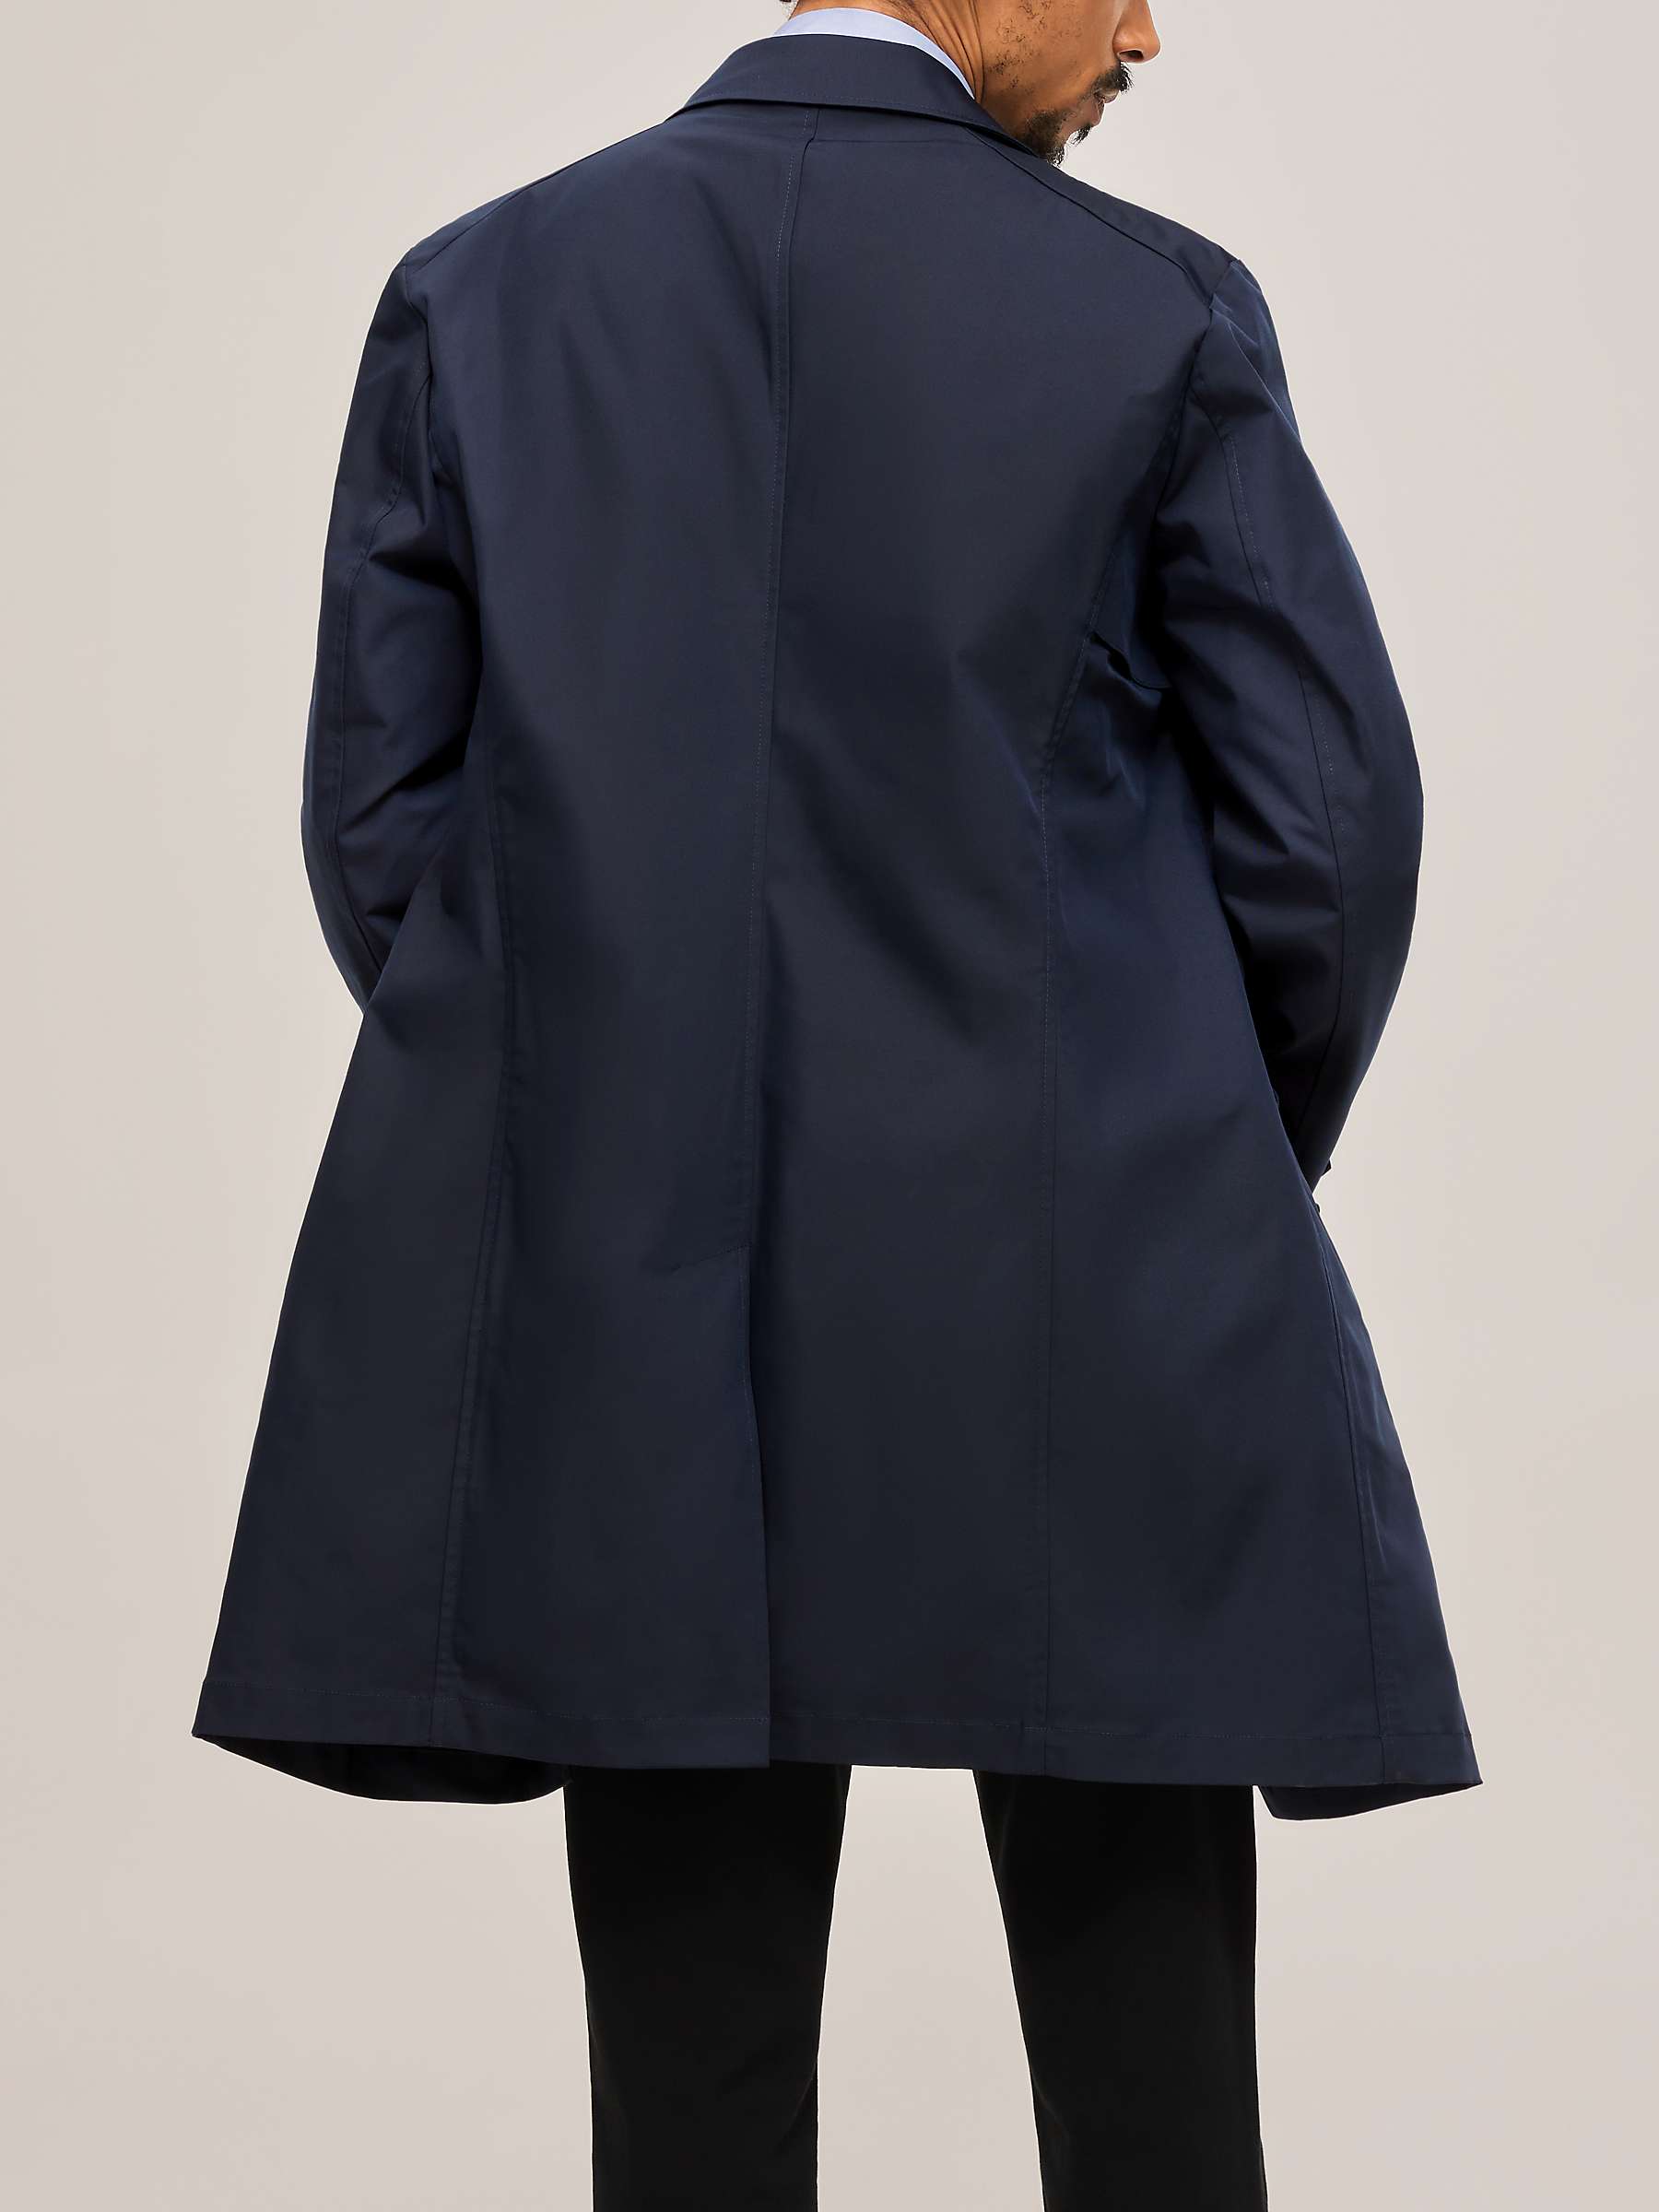 Buy Guards London Spitalfield Raincoat Online at johnlewis.com